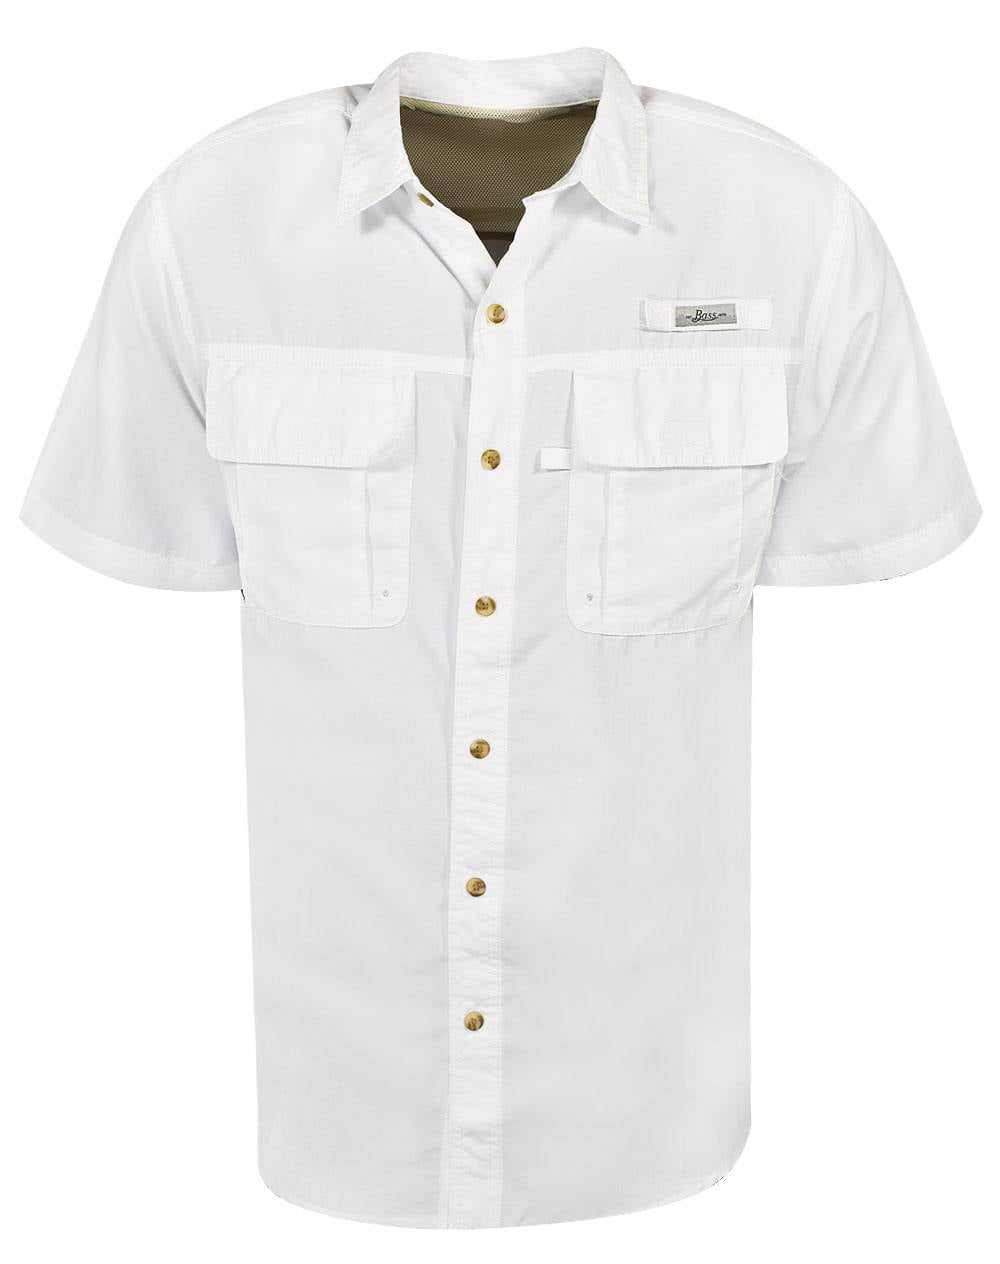 Mens Explorer Performance Short Sleeve Solid Polo Shirt G.H Bass & Co